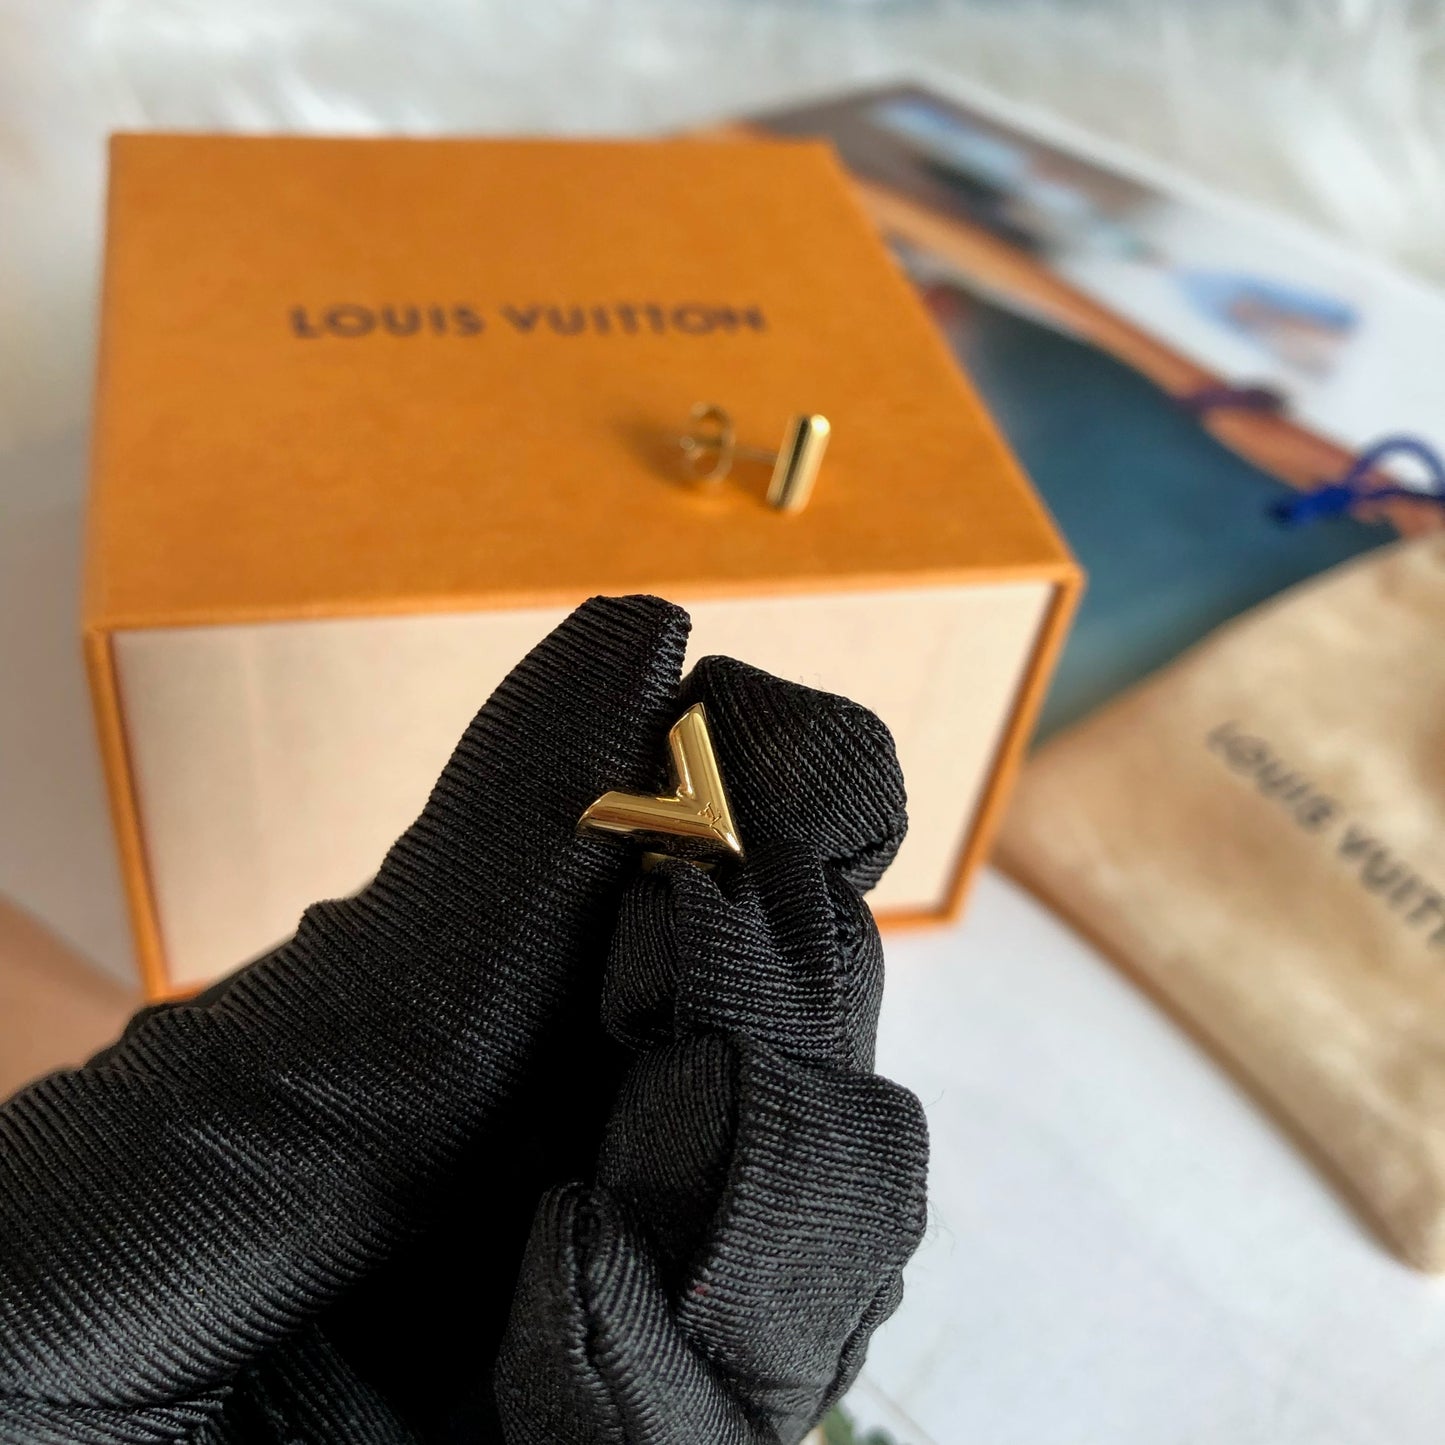 Louis Vuitton Essential V earrings | Classic V earrings